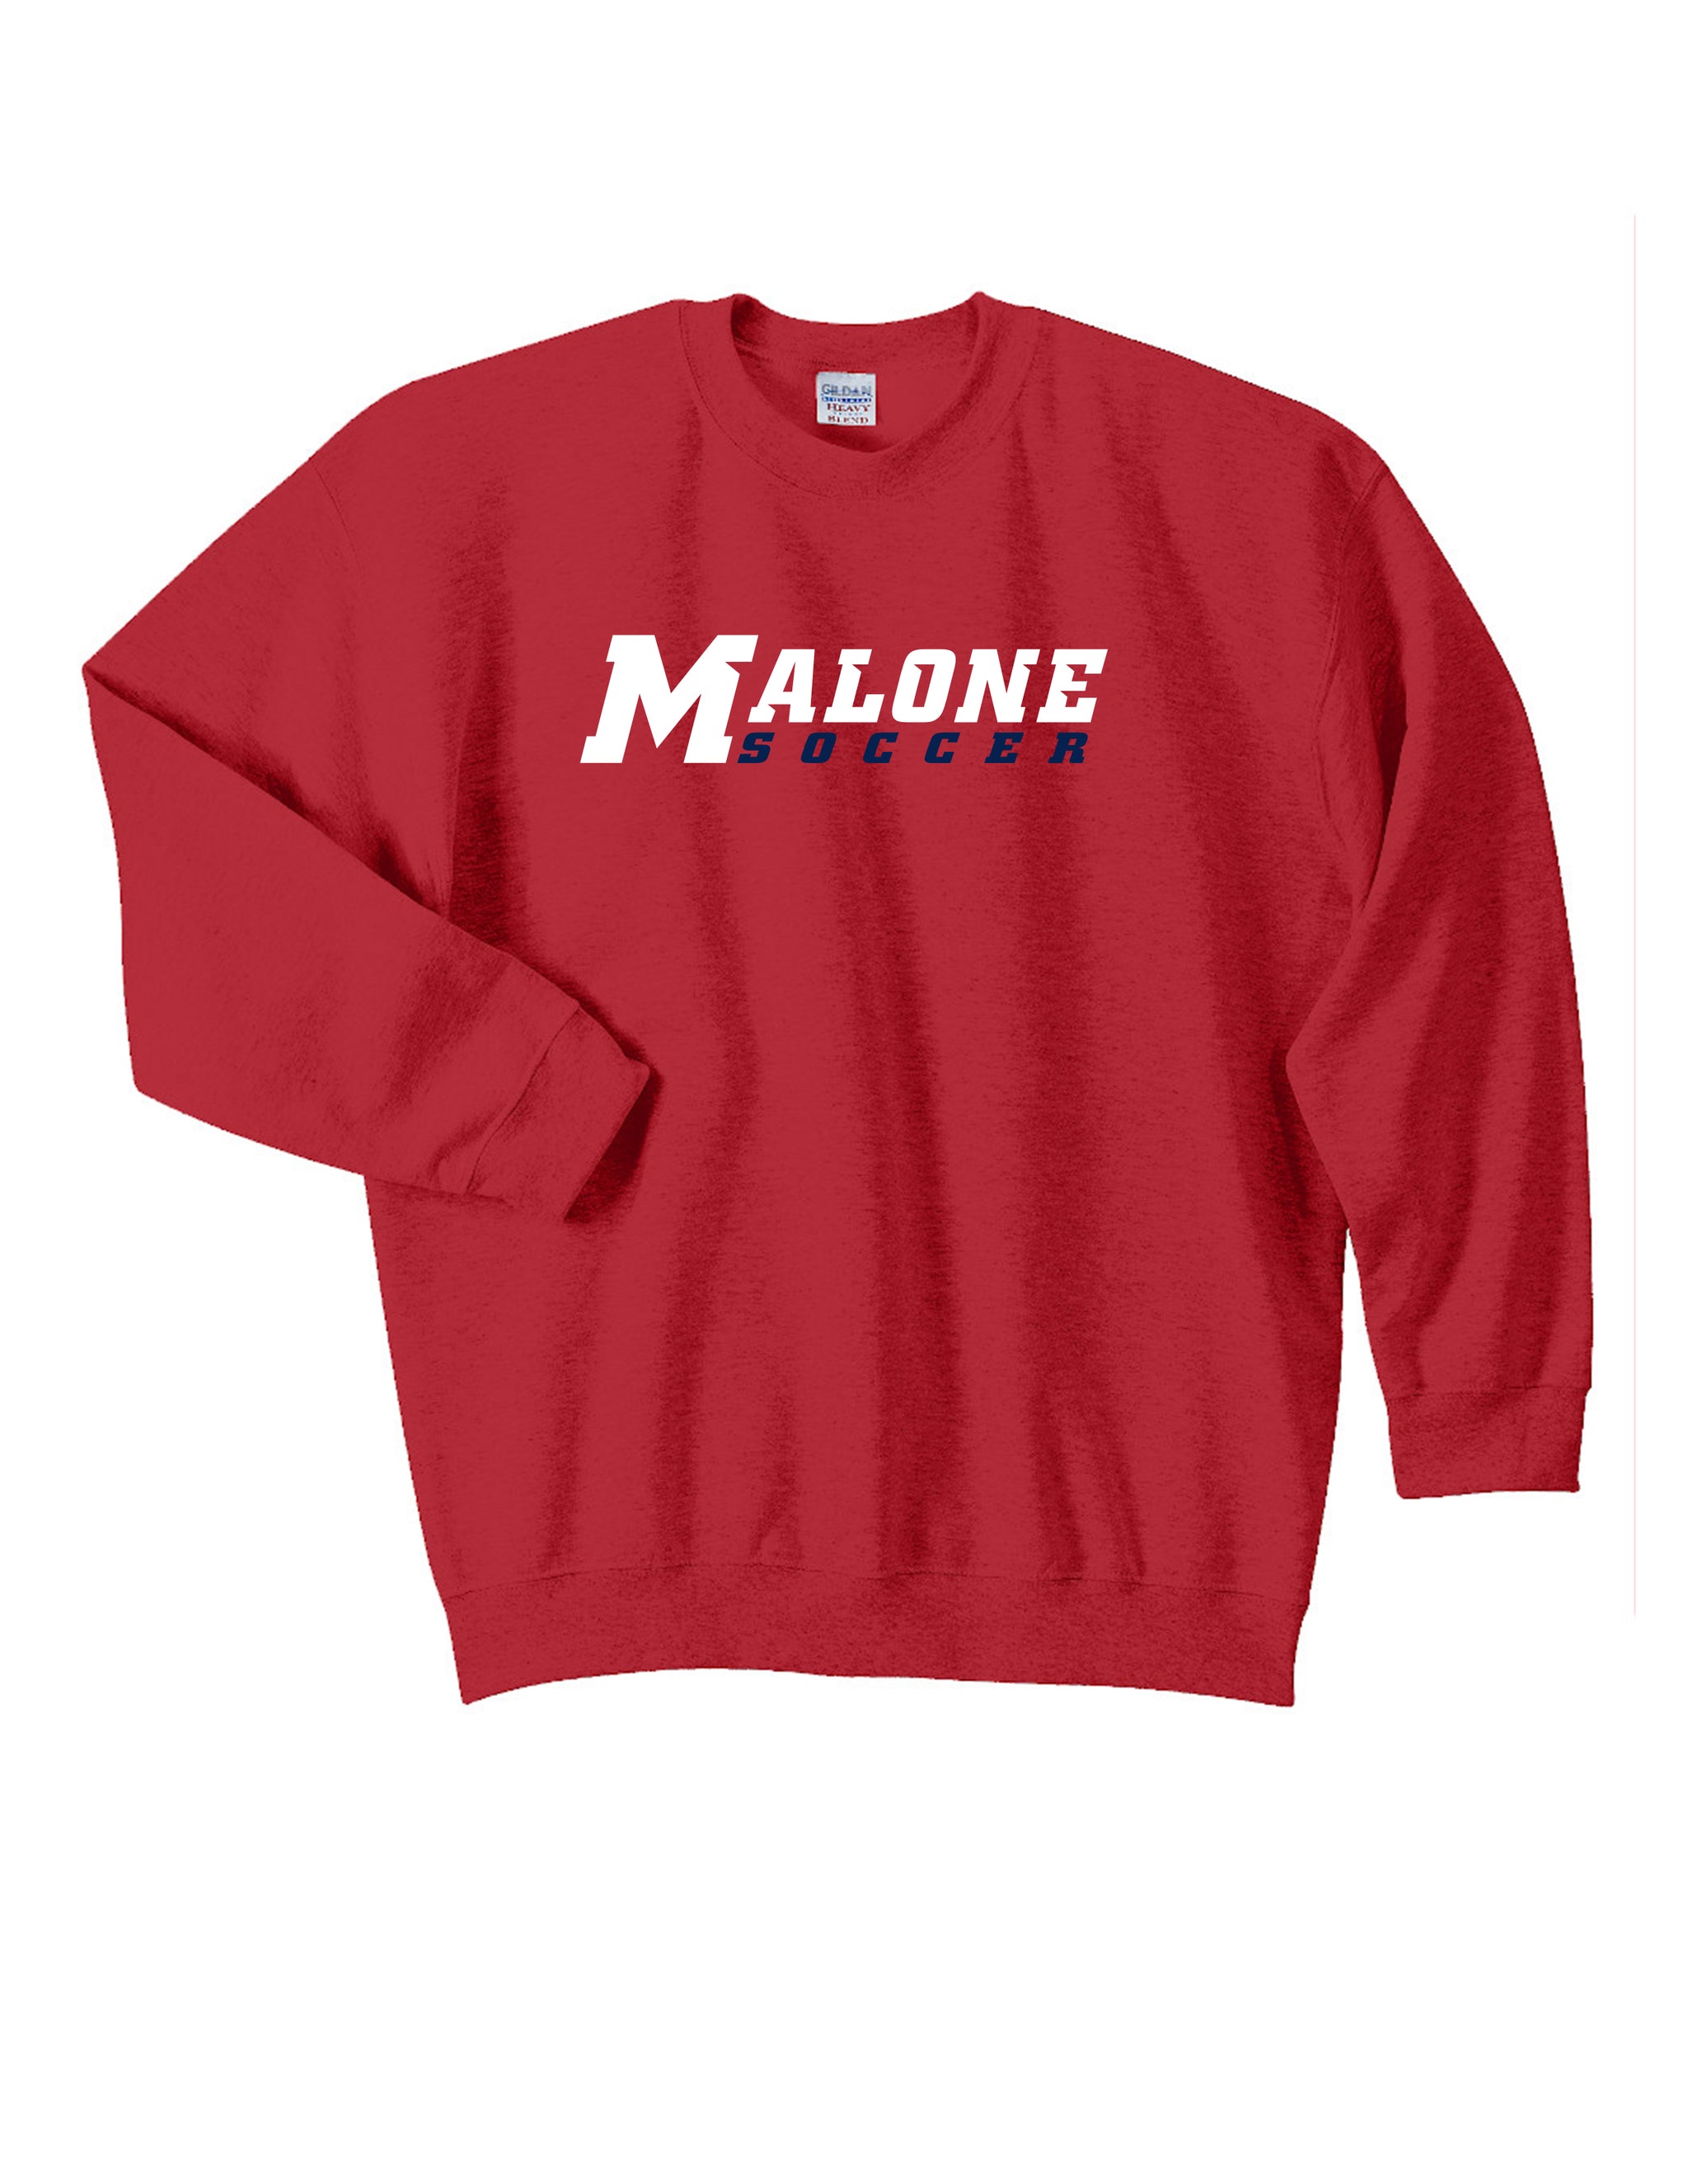 Malone Mens Soccer Unisex Crewneck Sweatshirt